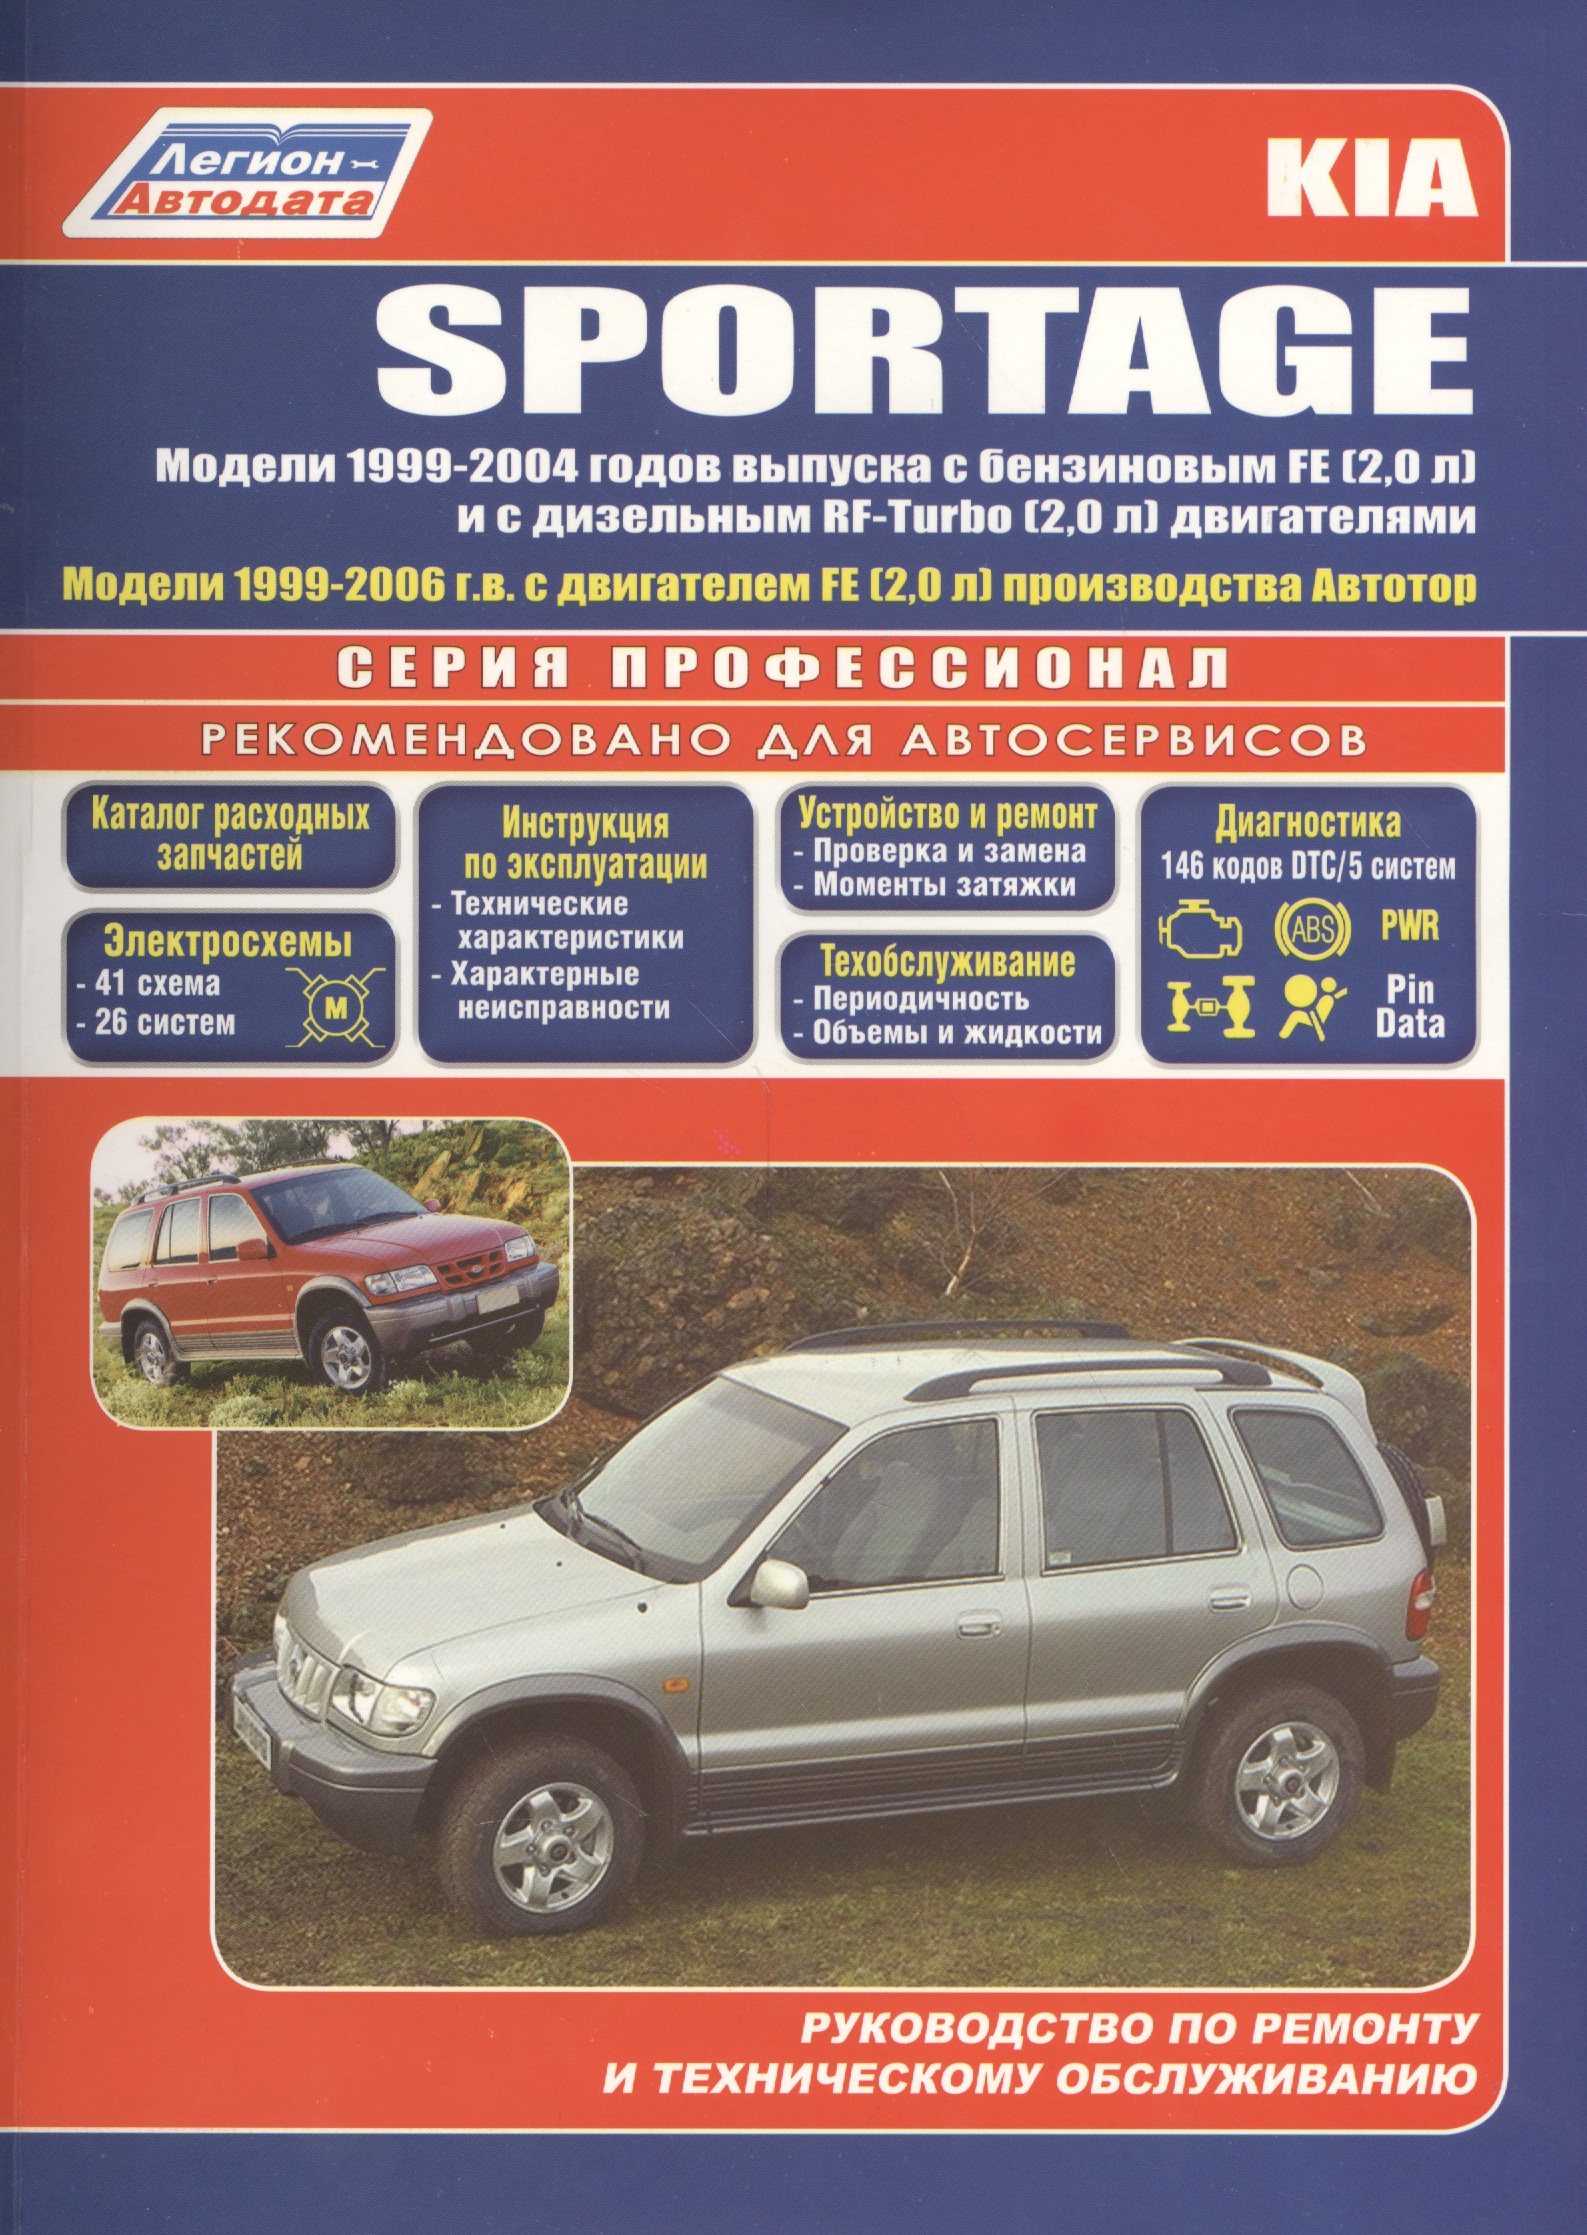 Kia Sportage Модели 2WD&4WD 1999-2004 г вып. с бенз. FE (2,0)…(мПрофессионал)